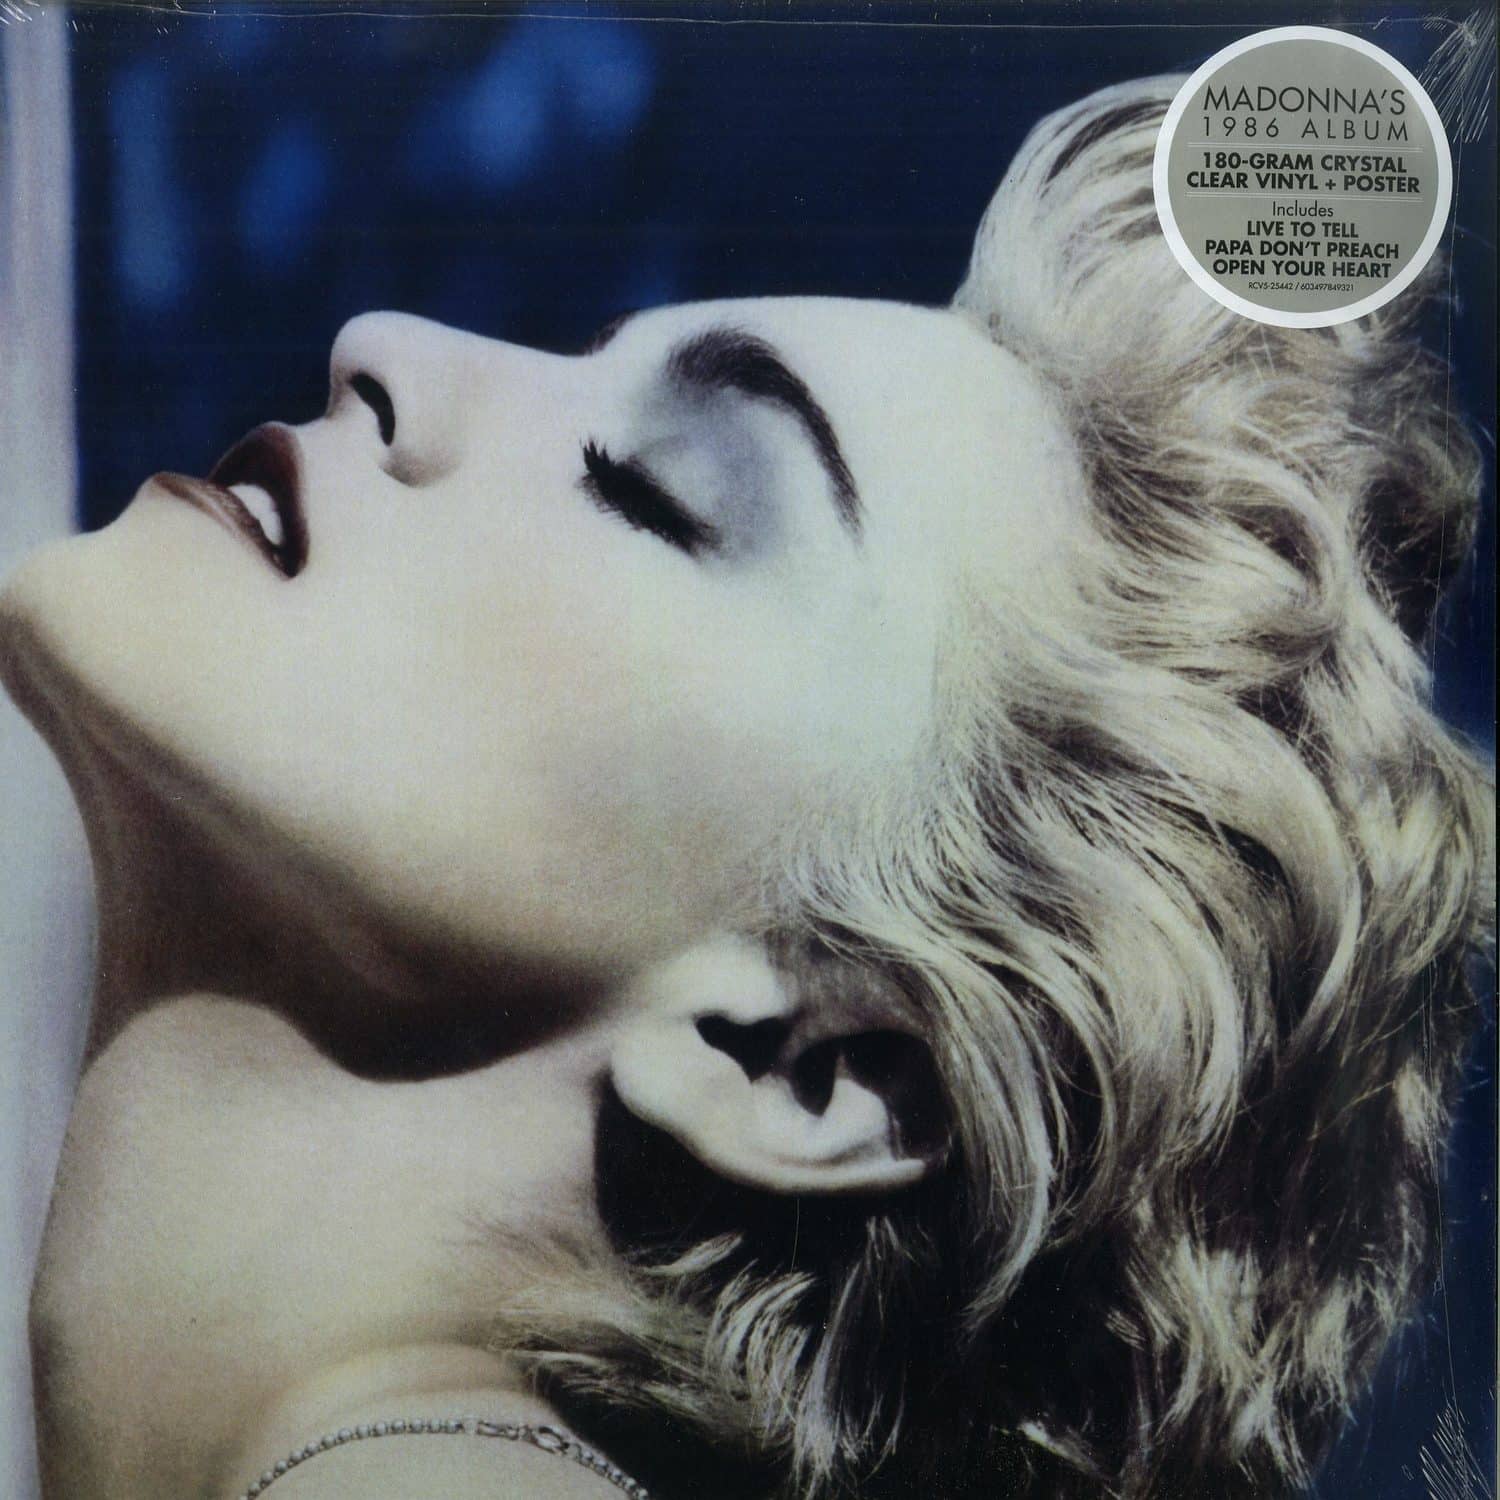 Madonna - TRUE BLUE 